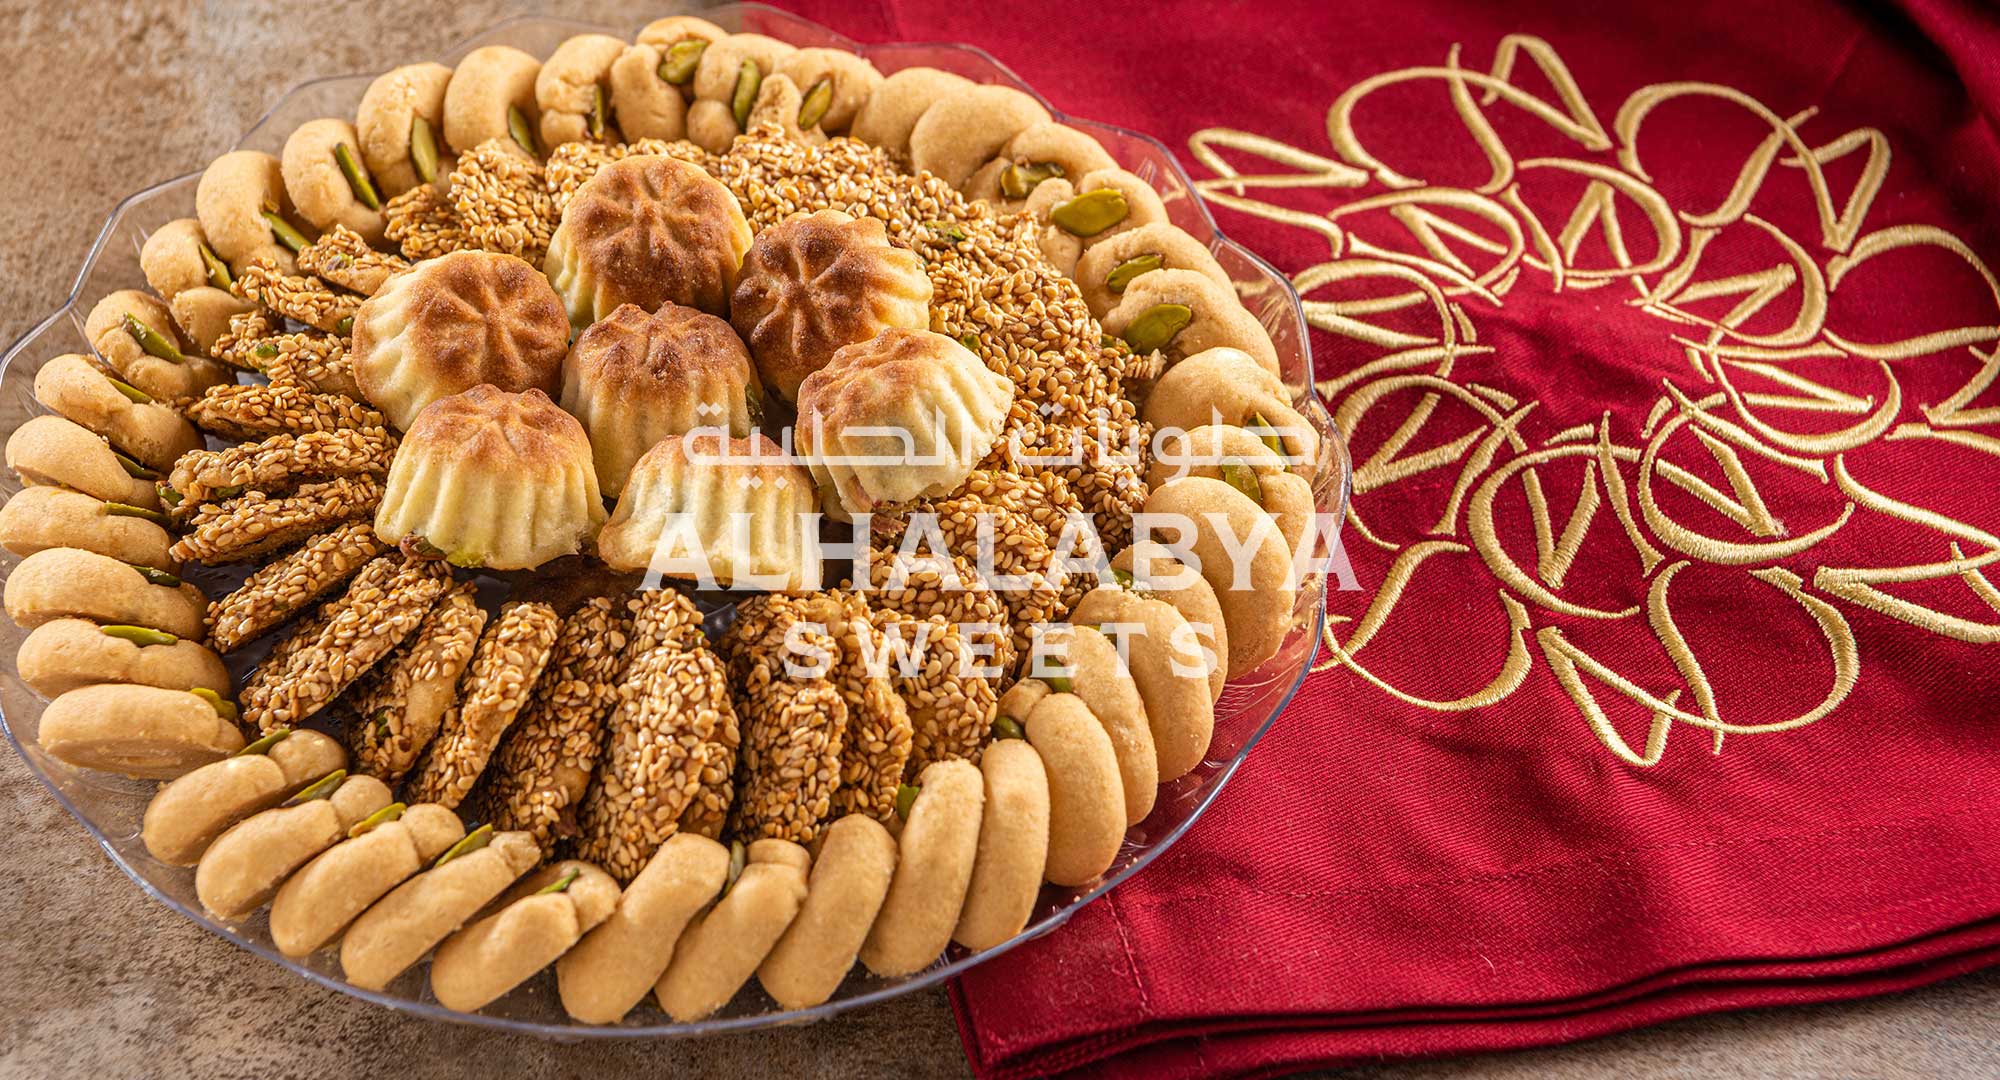 Celebrating Arabic Heritage Through Sweets